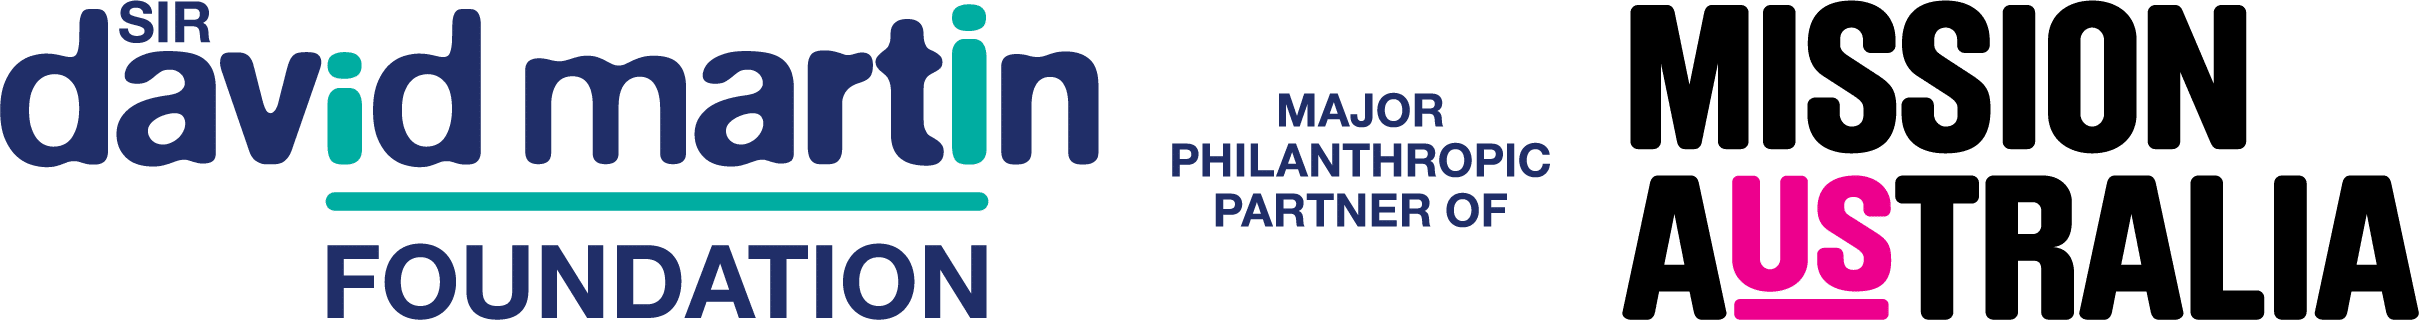 Sir David Martin Foundation, proud philanthropic partner of Mission Australia